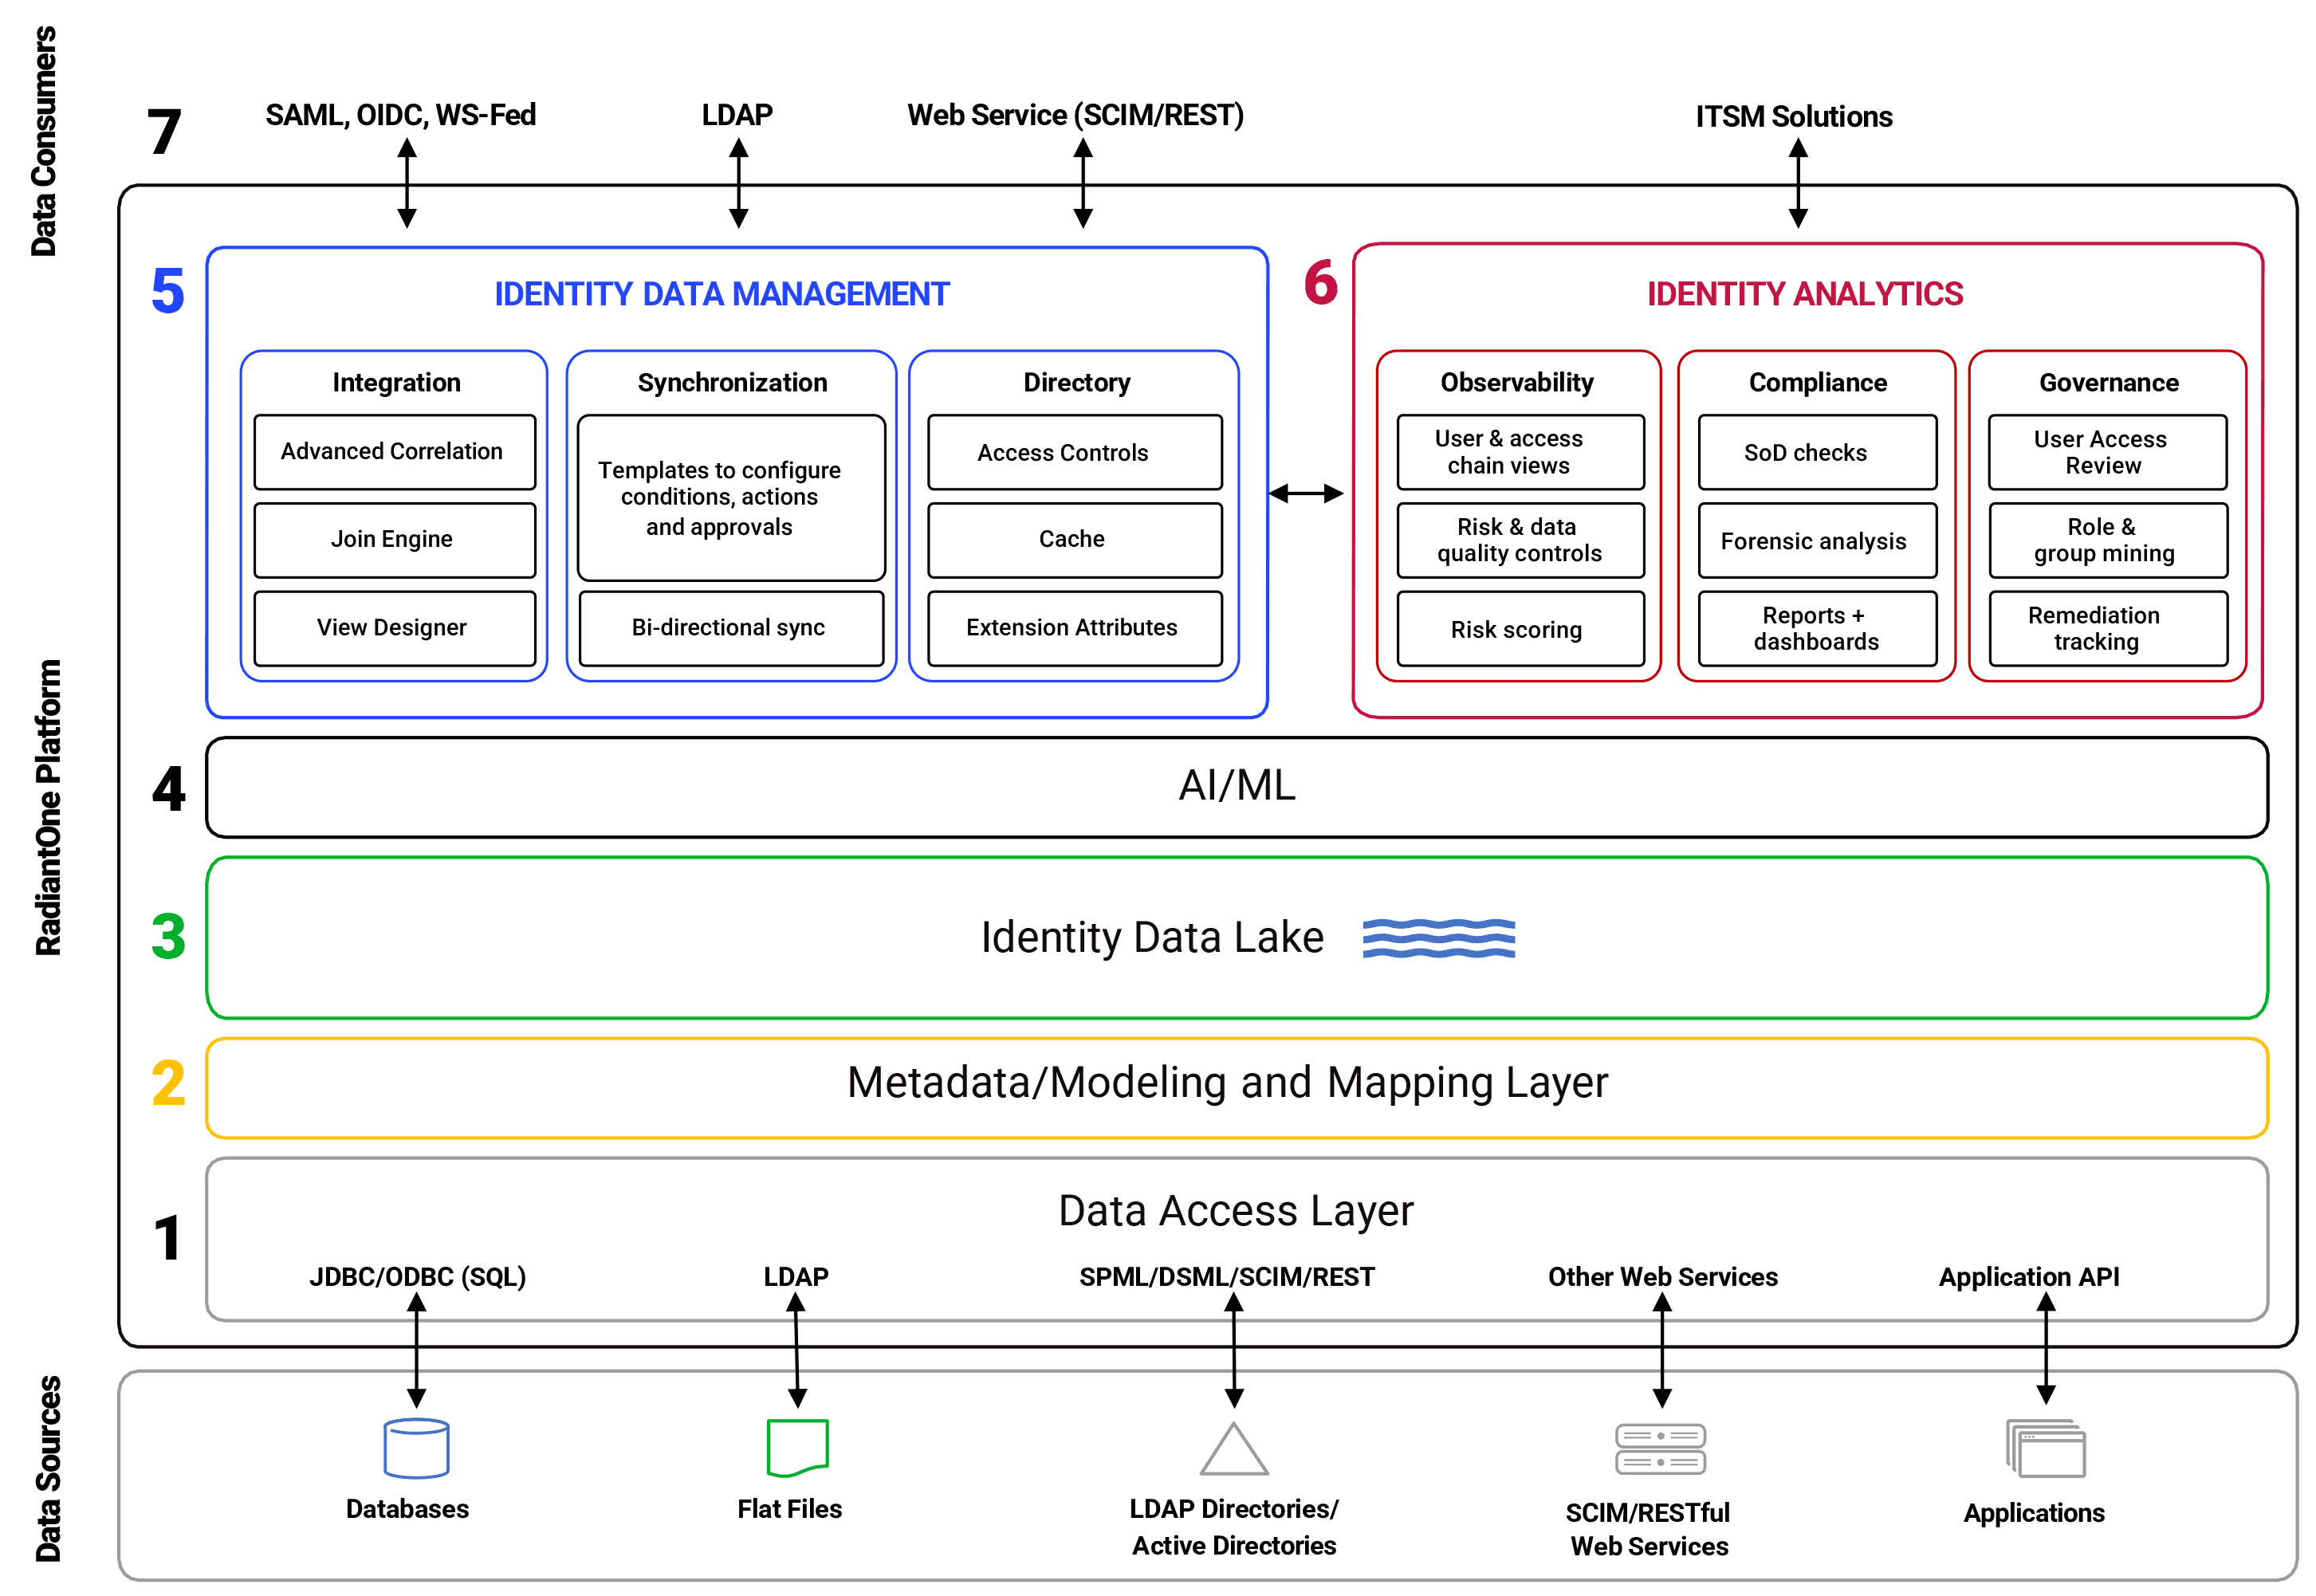 The RadiantOne Identity Data Platform Reference Architecture